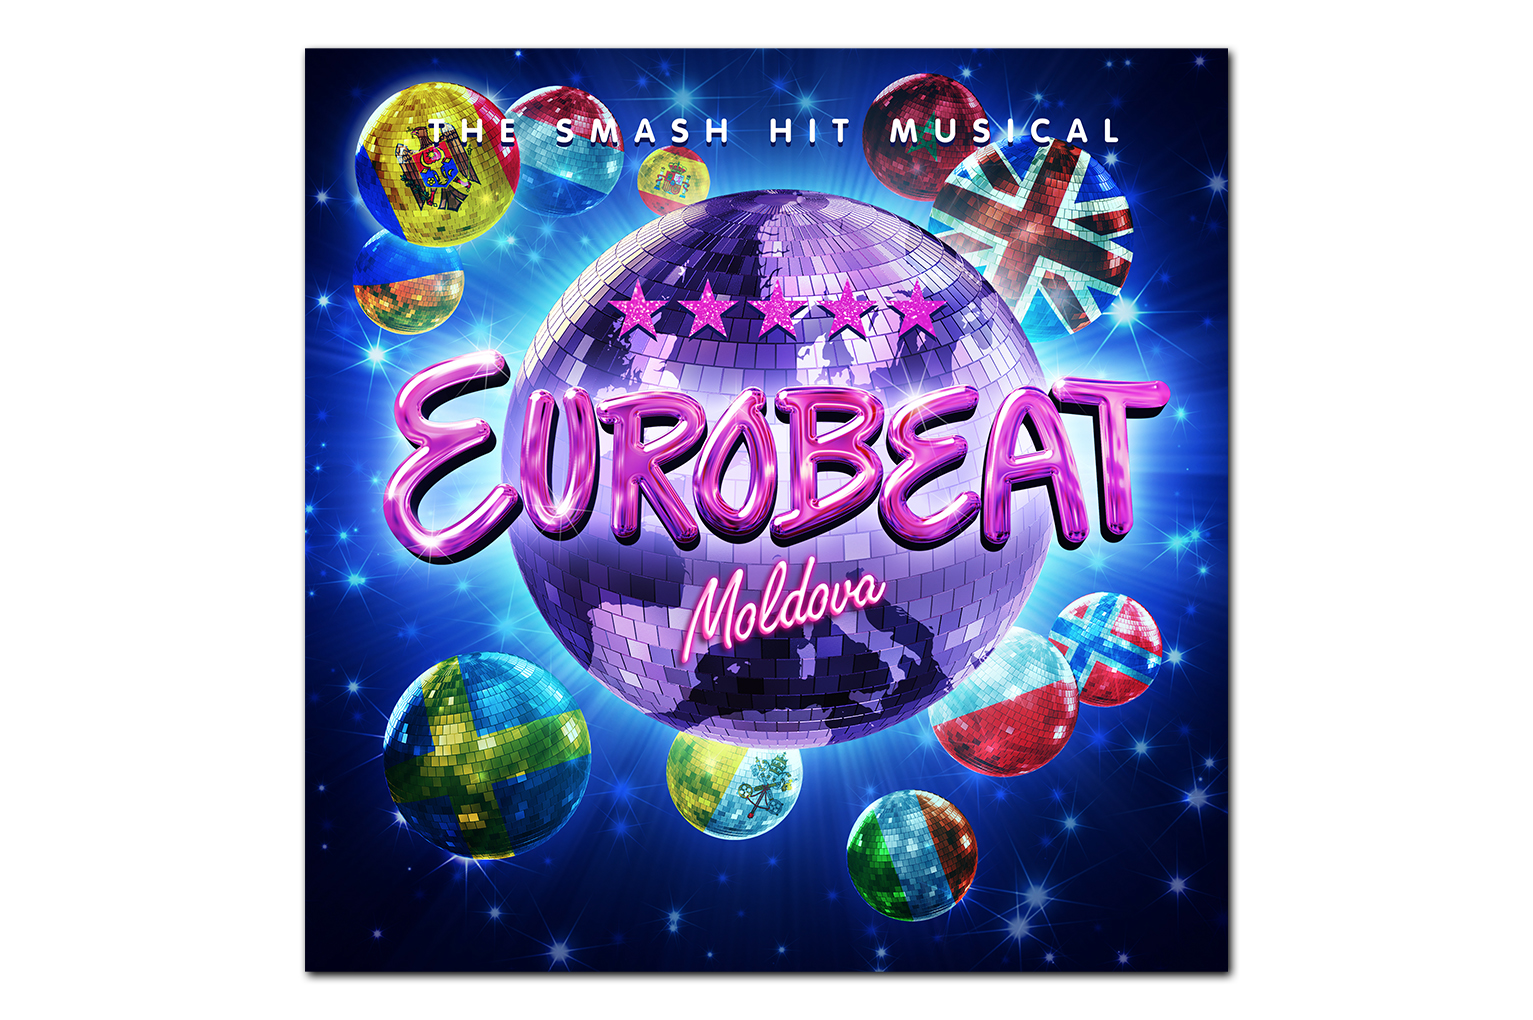 Eurobeat Moldova cast album